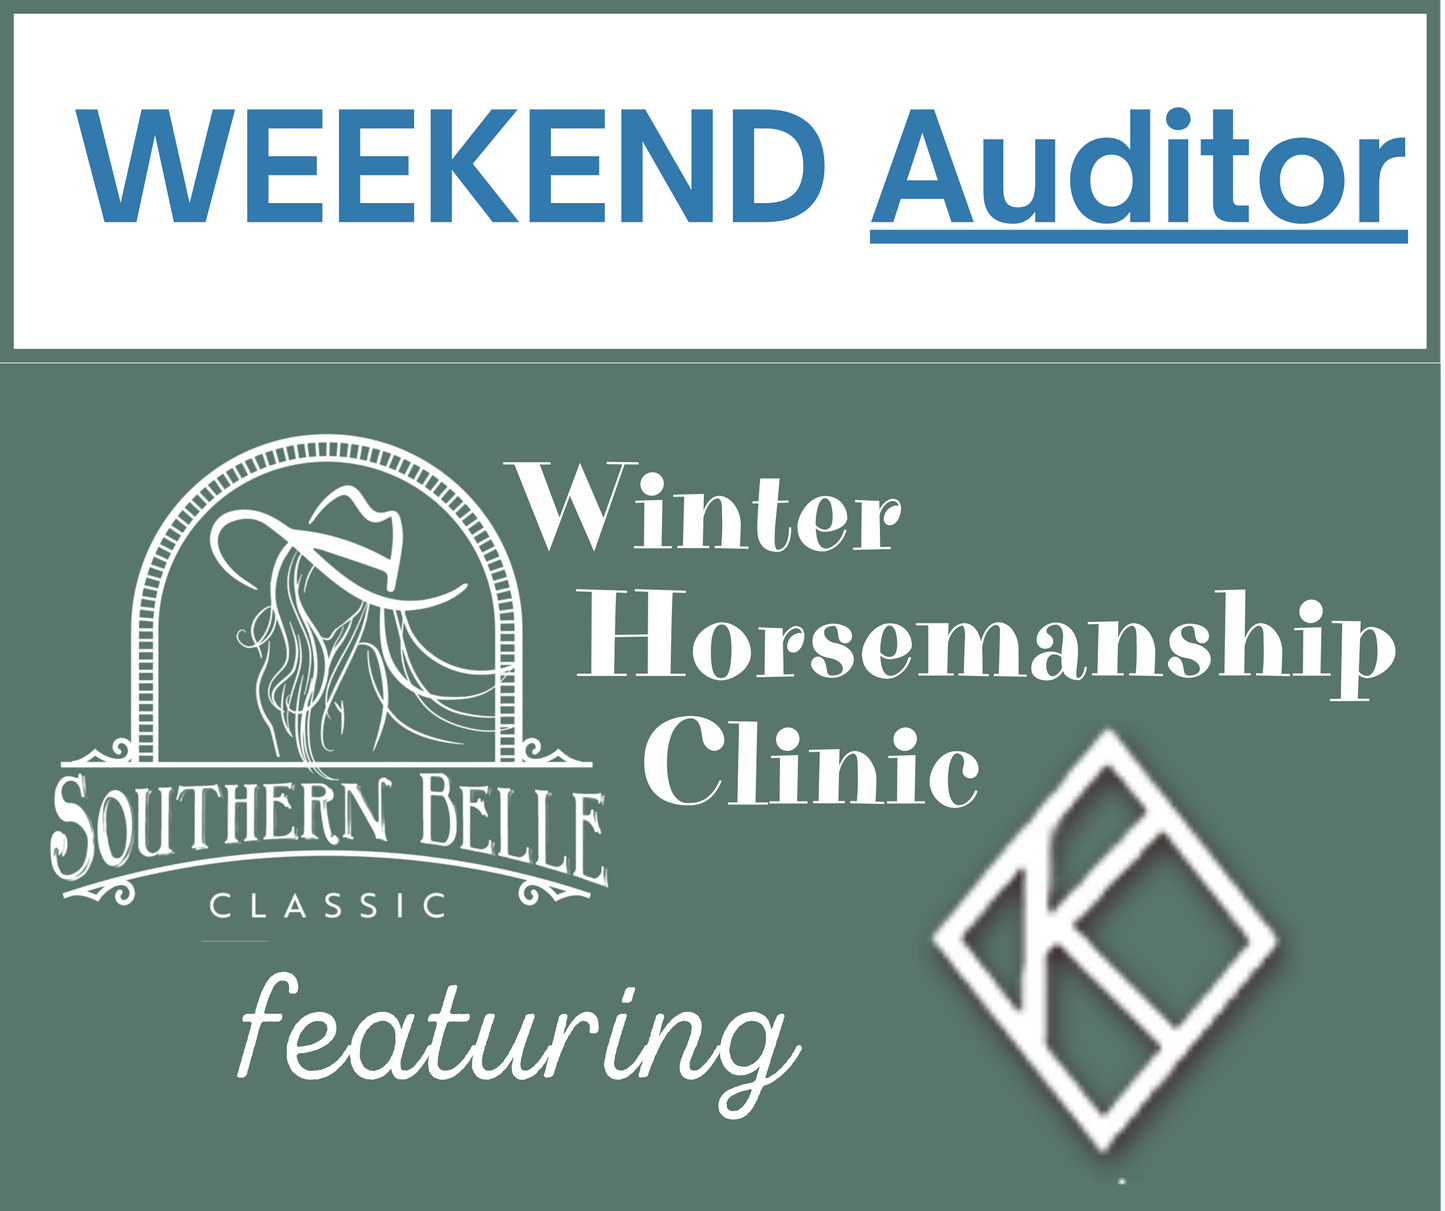 Winter Horsemanship Clinic with Diamond K Weekend  AUDITOR